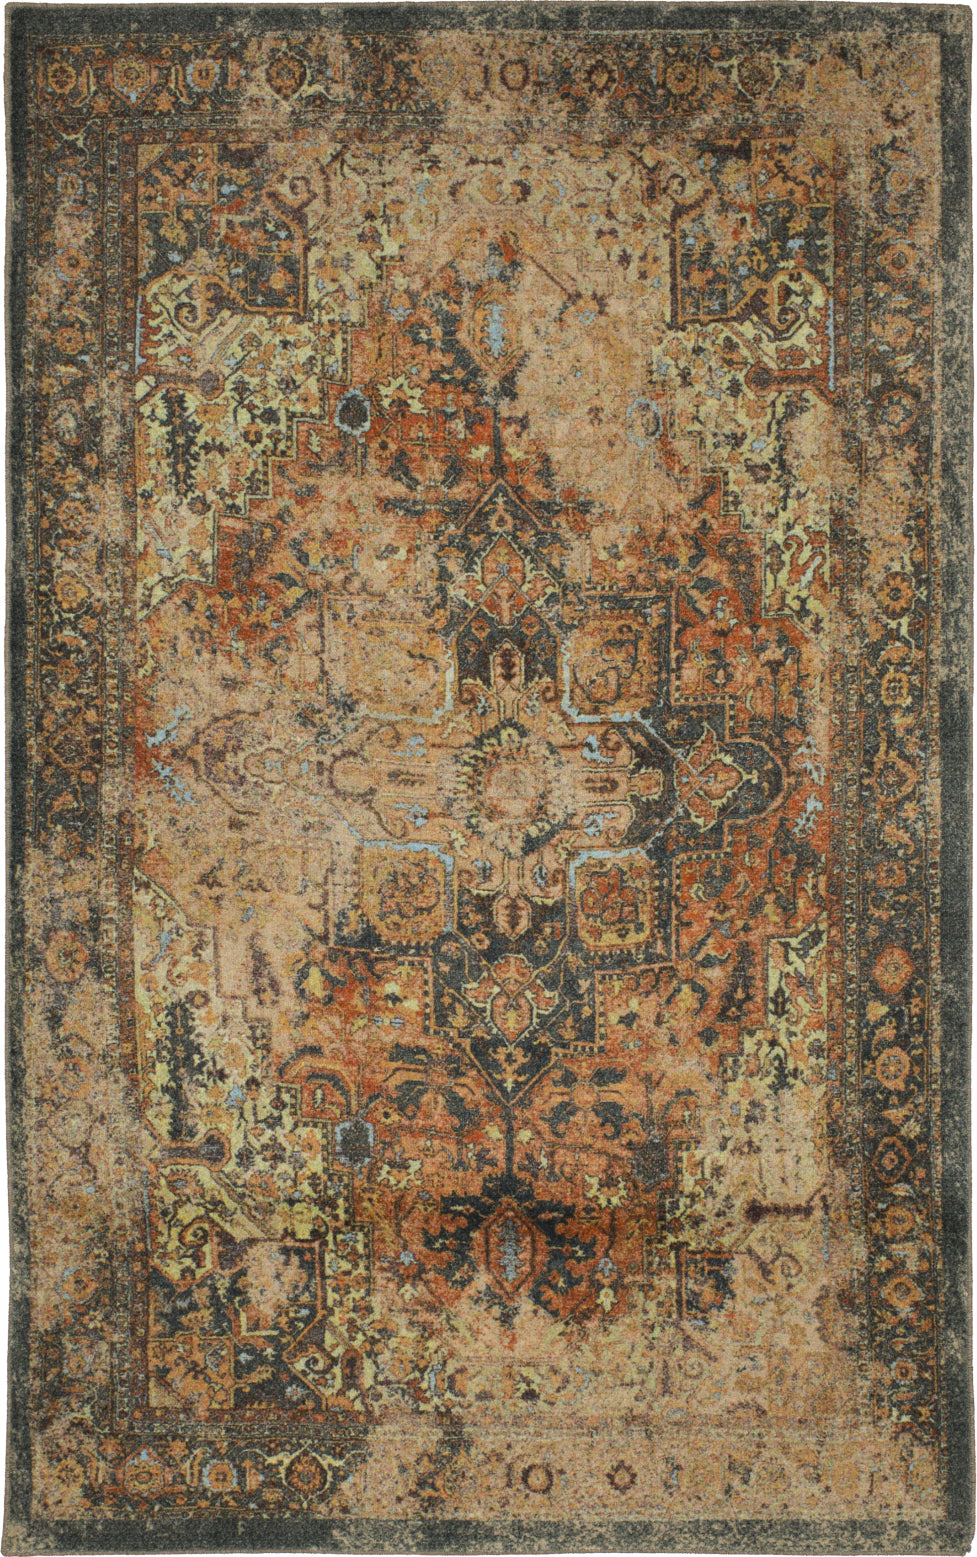 Karastan Antiquity Hamedan Distressed Area Rug Main Image 5'x8' Size 